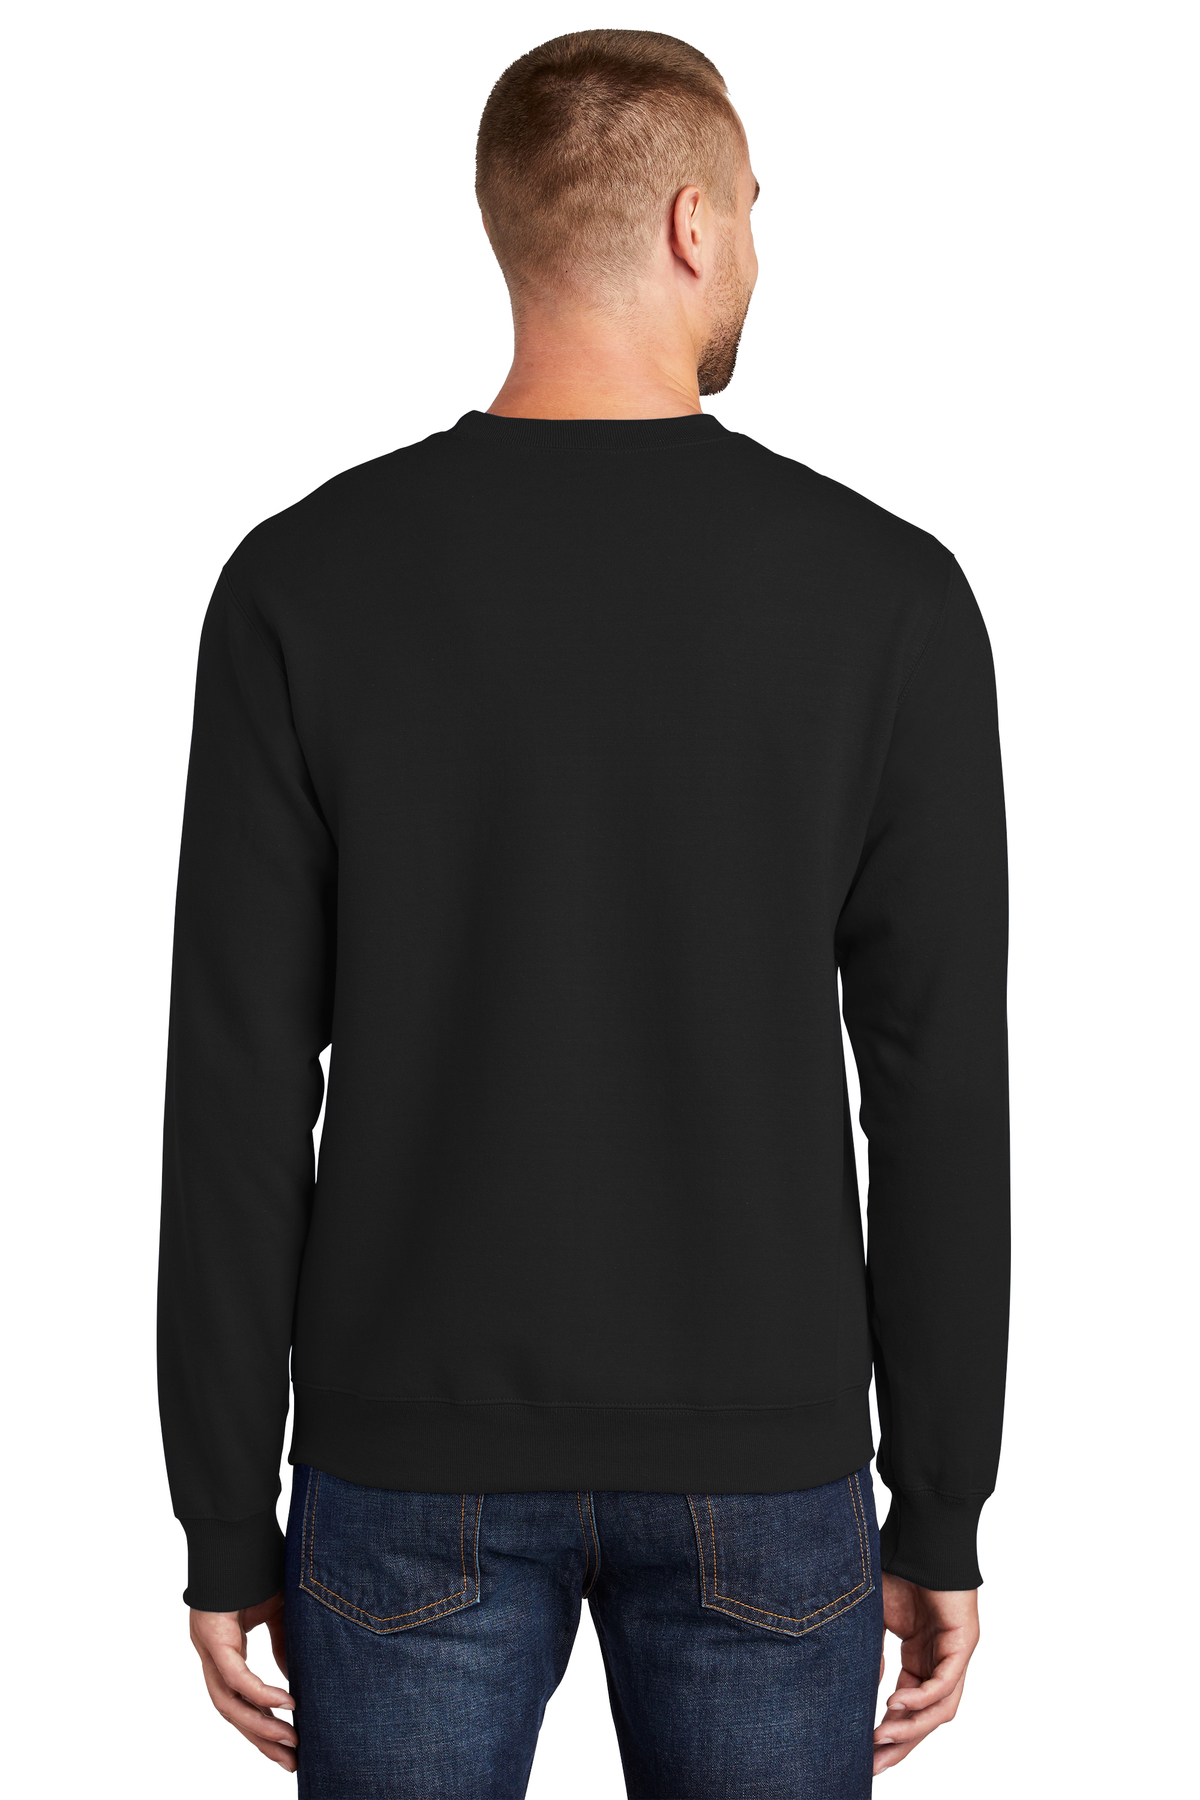 Port & Company Essential Fleece Crewneck Sweatshirt | Product | Company ...